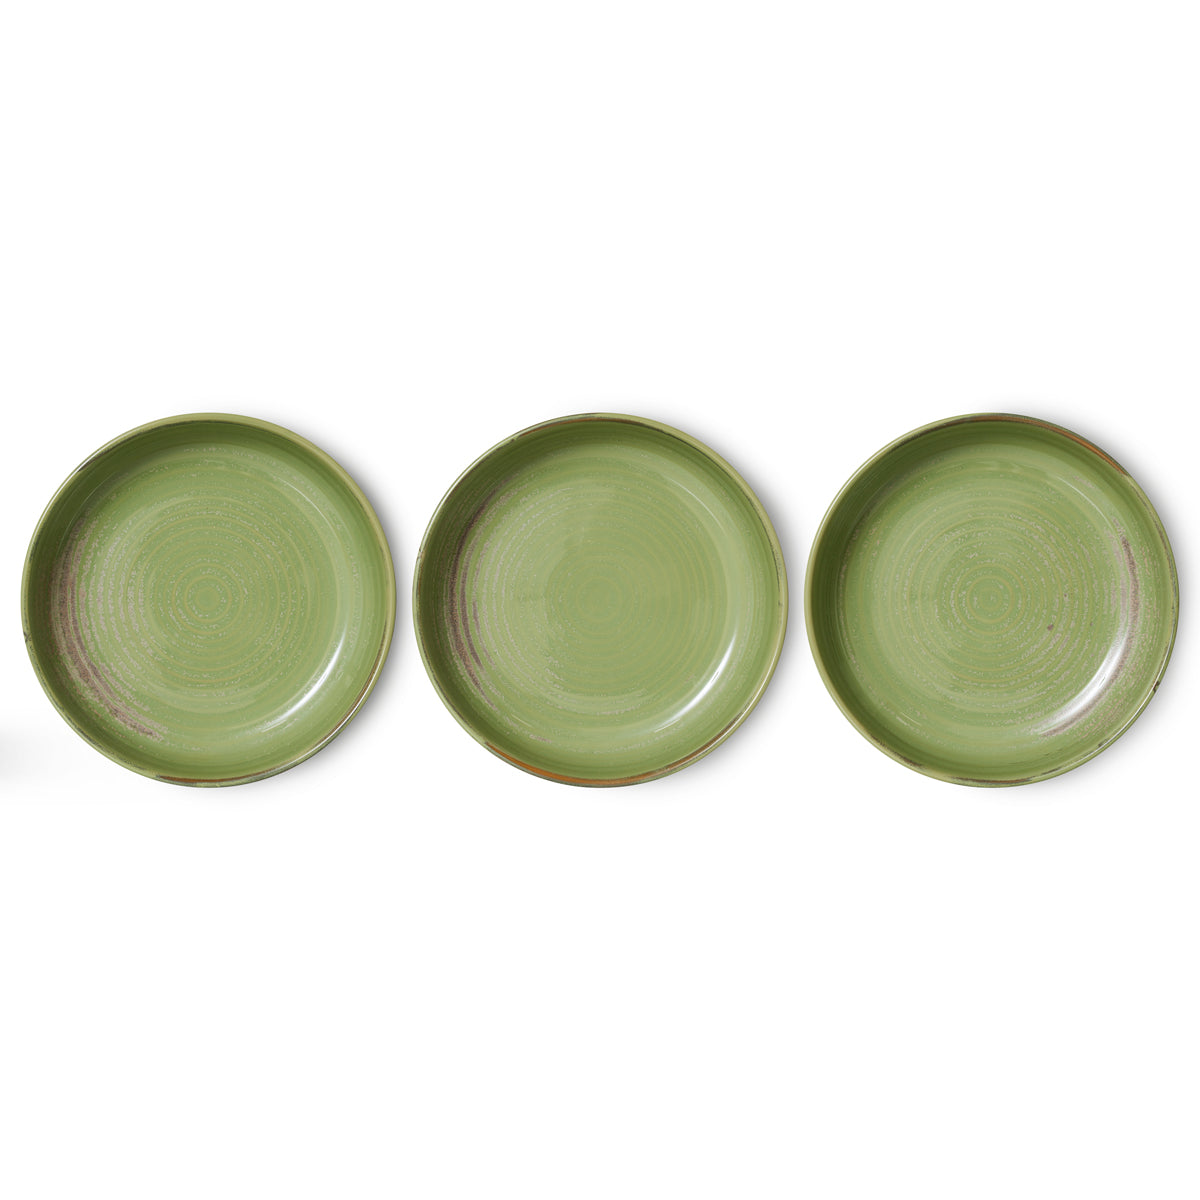 Chef Ceramics: Deep Plate L, Moss Green